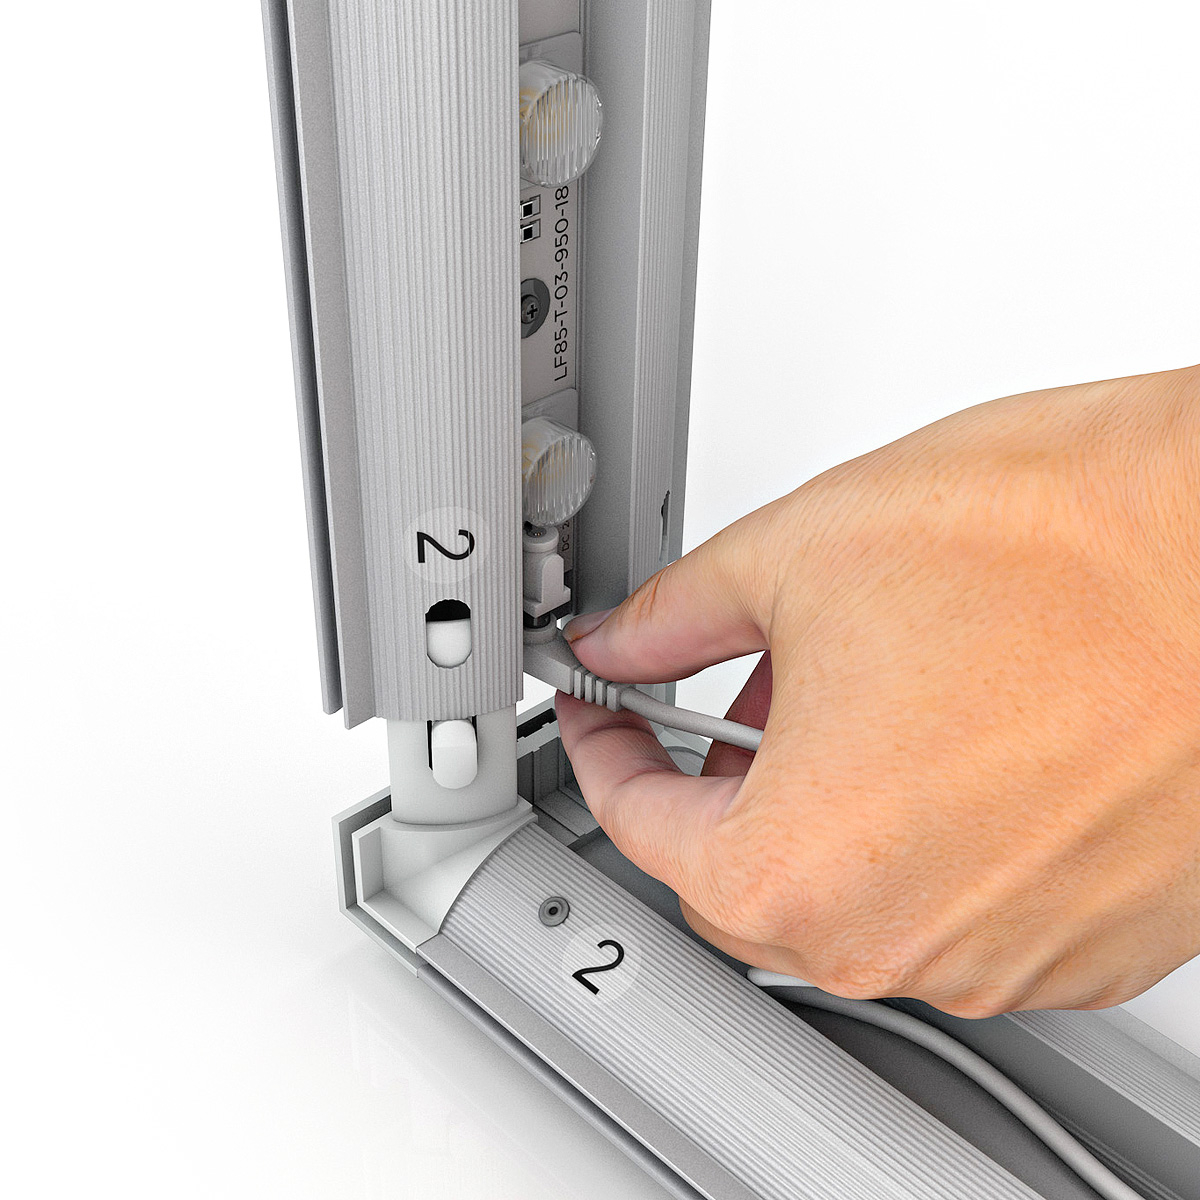 PIZAZZ® LED Lightbox Uses A Plug And Play Operation